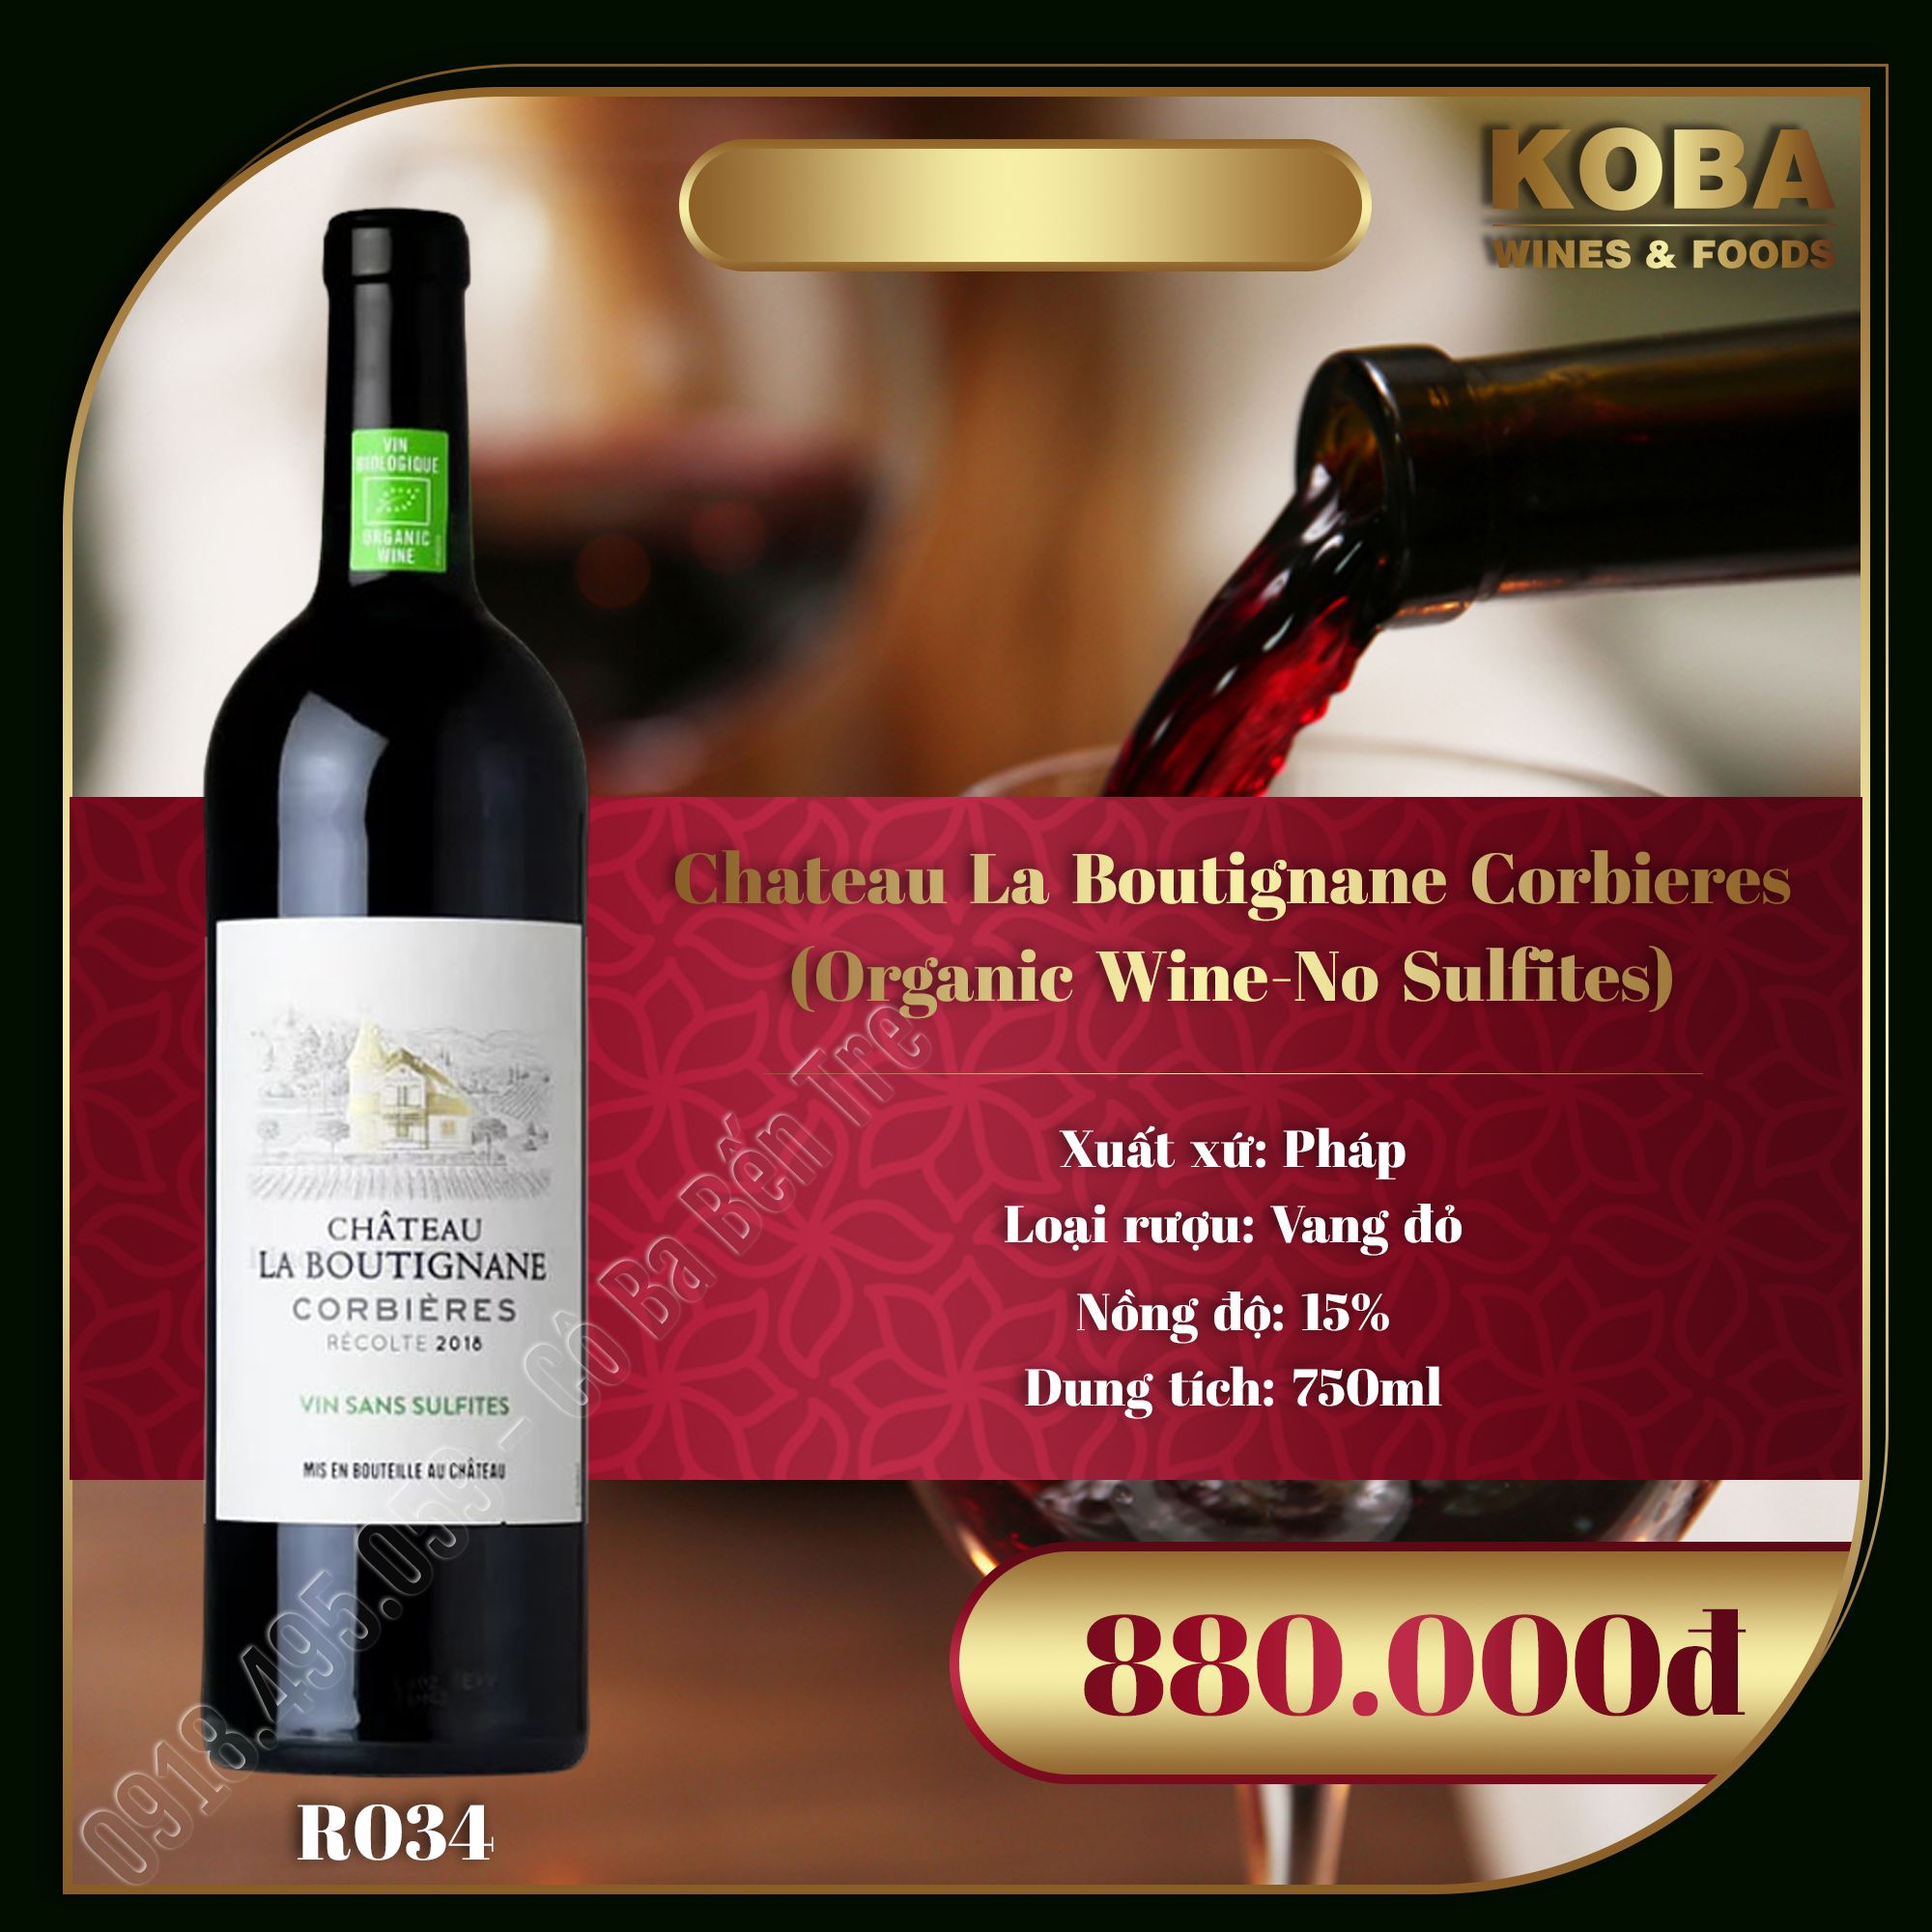 Rượu Vang Đỏ Pháp - Chateau La Boutignane Corbieres (Organic Wine-No Sulfites) - 15 độ